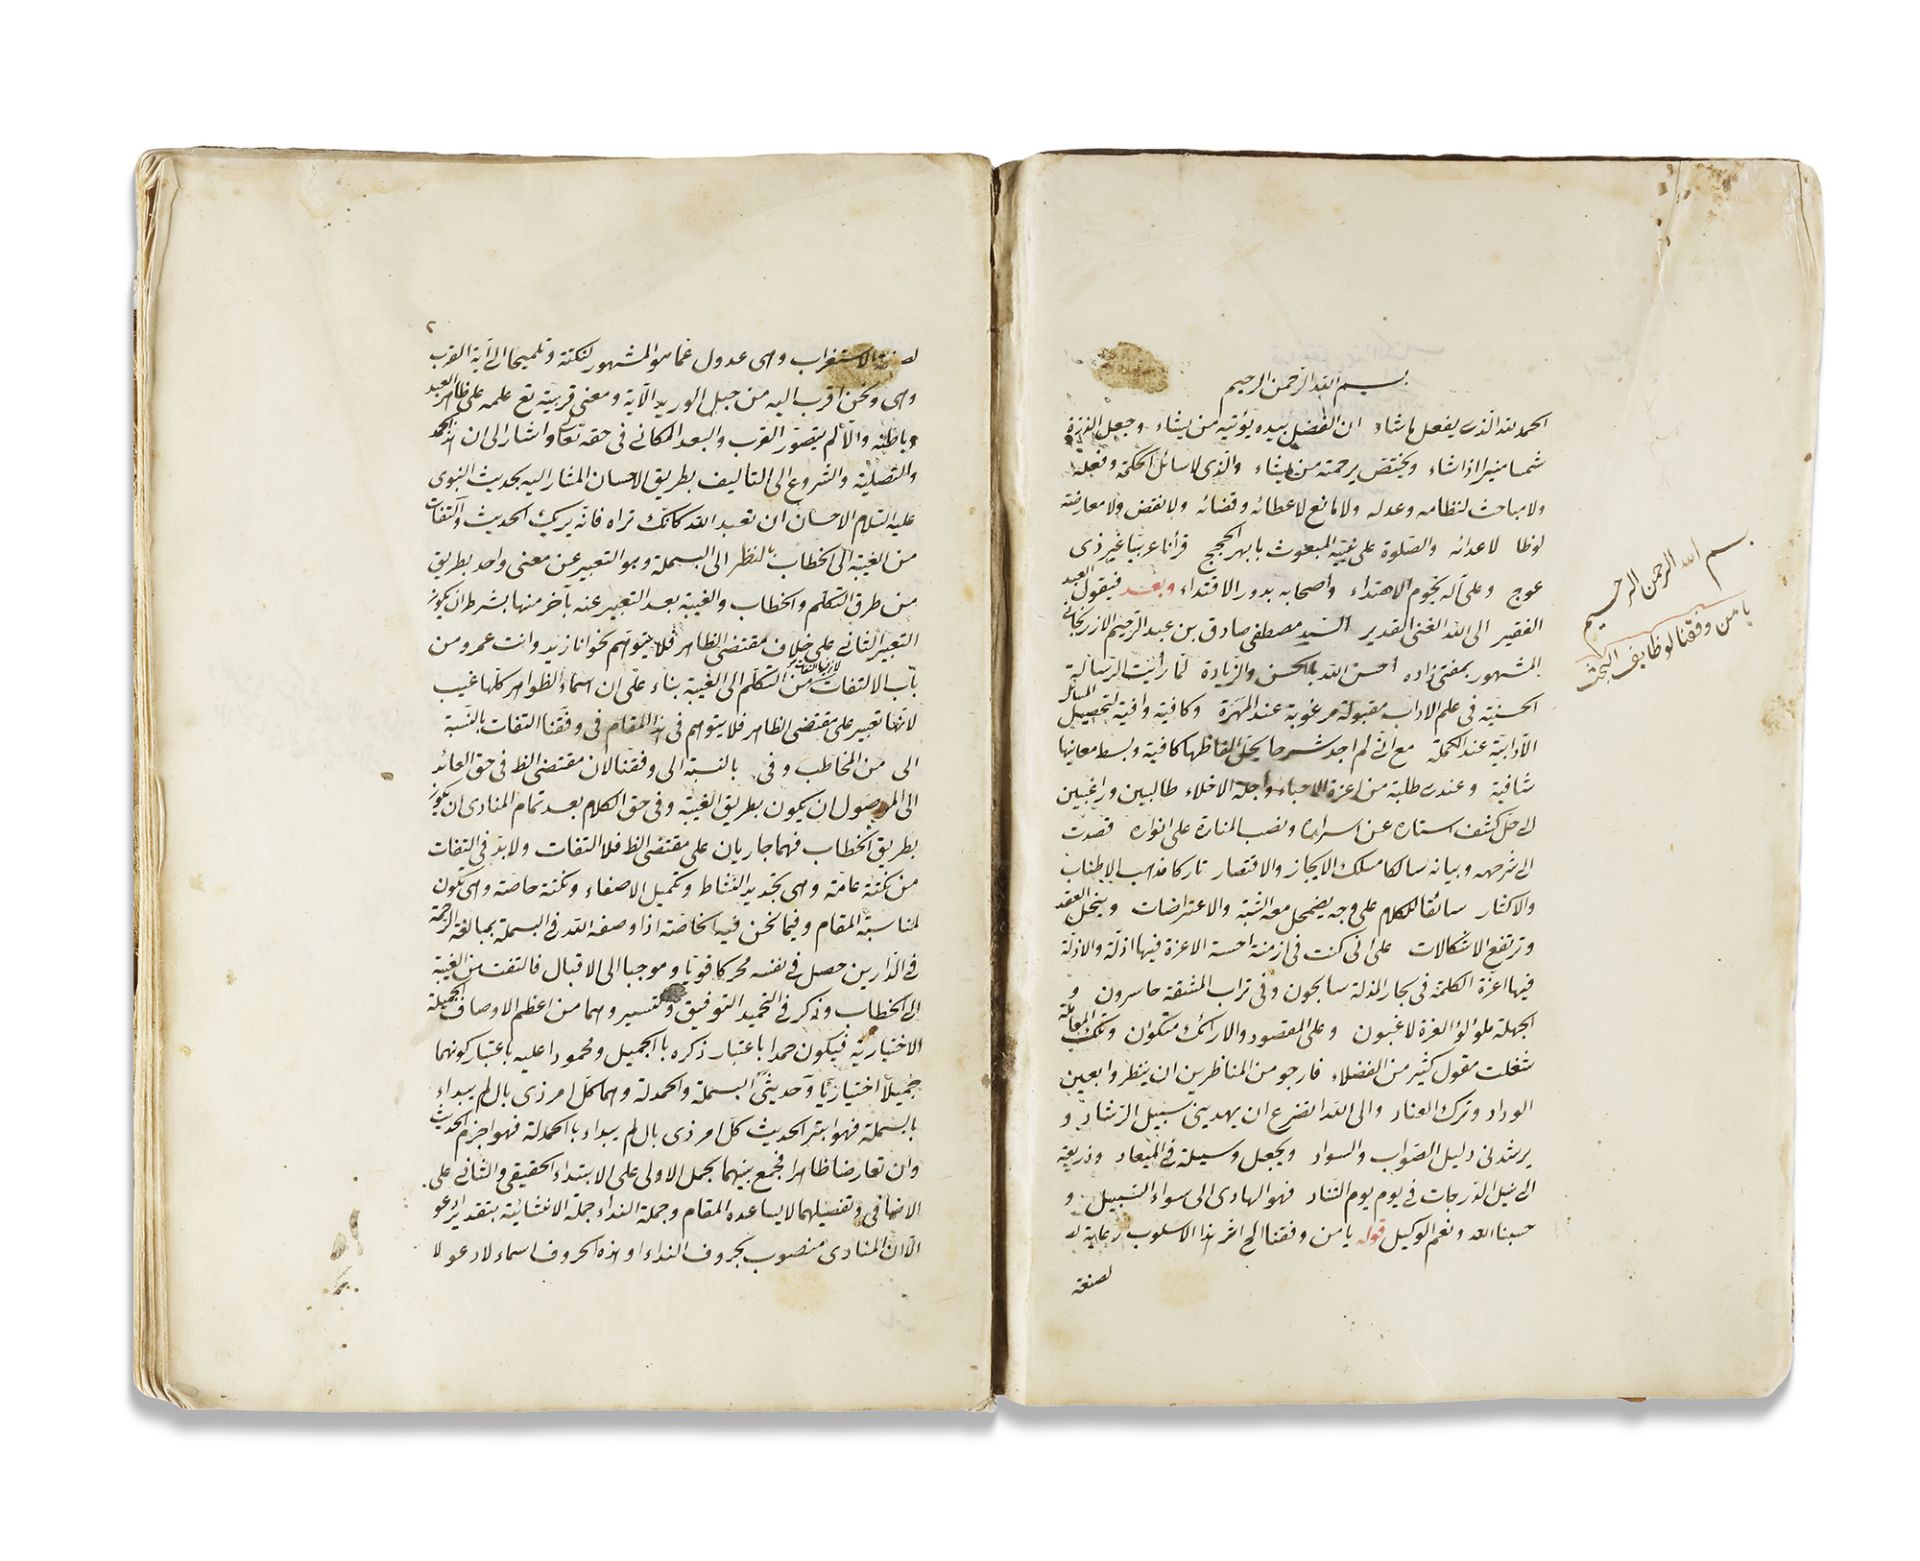 SHARH ALA AL-RISALAH AL-HUSAYNIYAH, COPIED IN JUMADA II 1215 AH/ OCTOBER 1800 AD